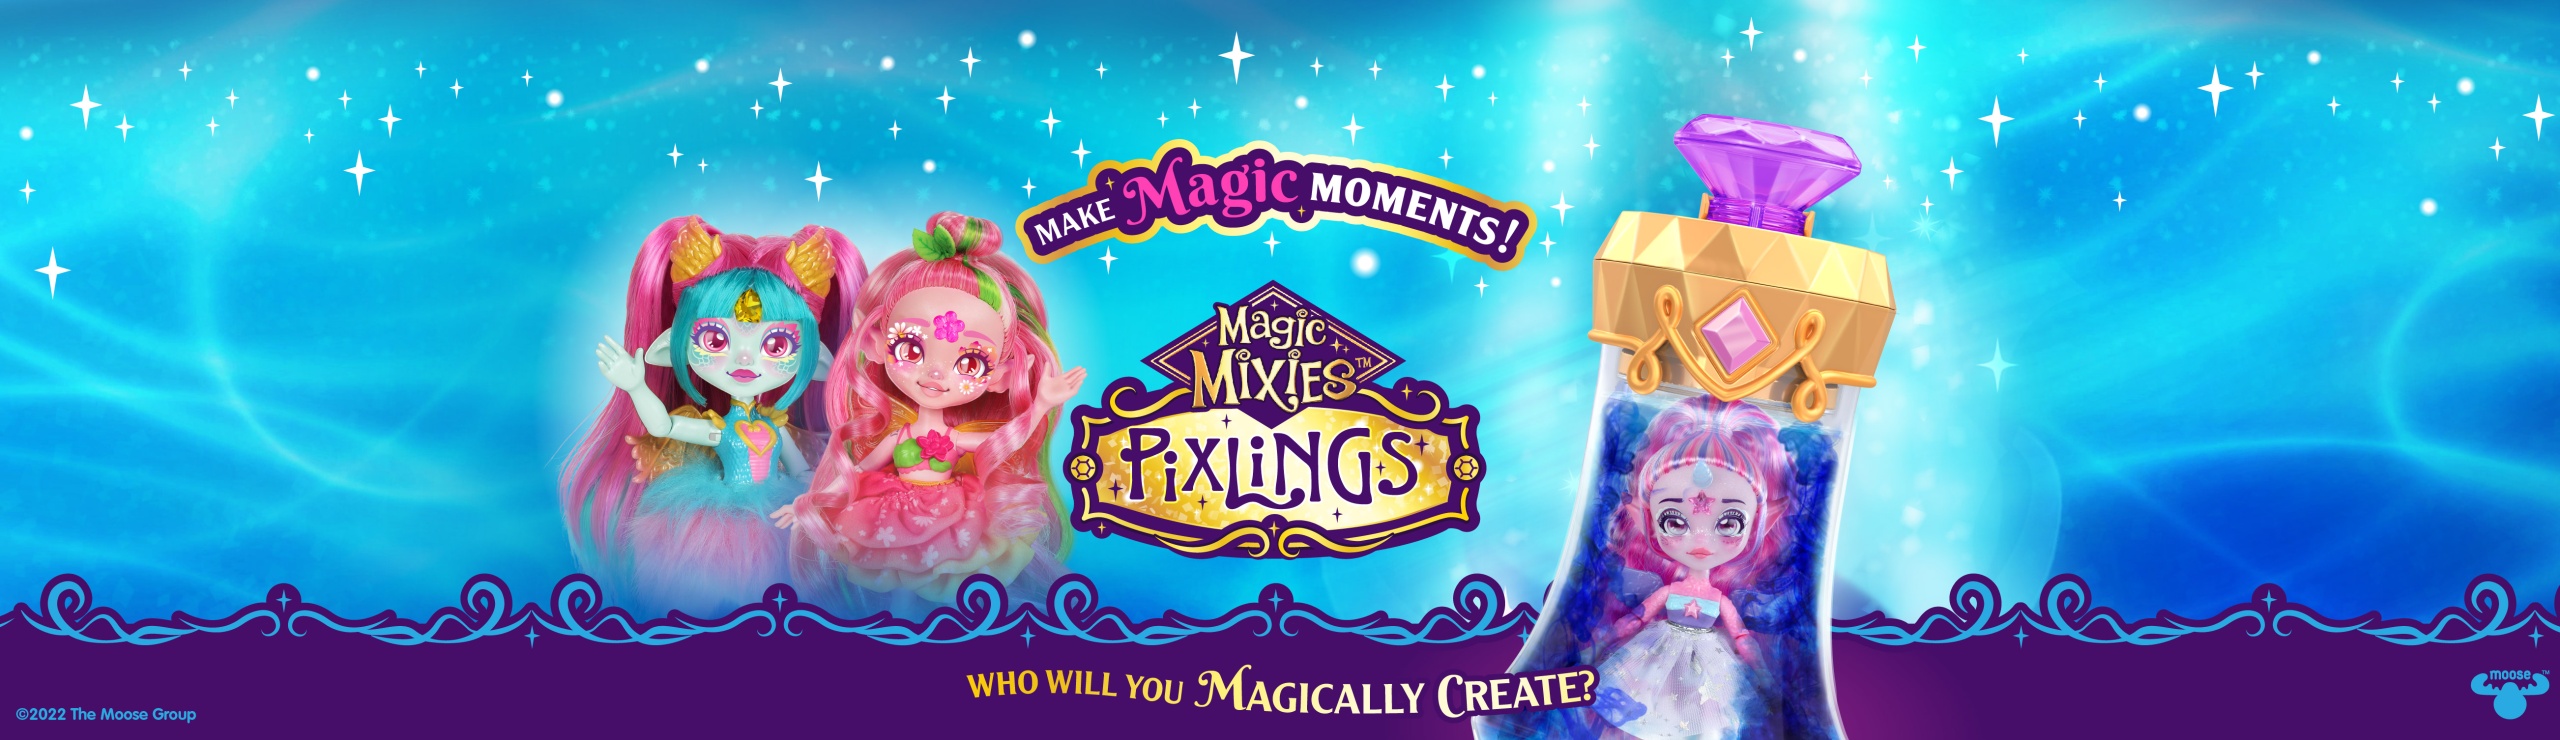 Magic Mixies Pixlings - Moose Toys